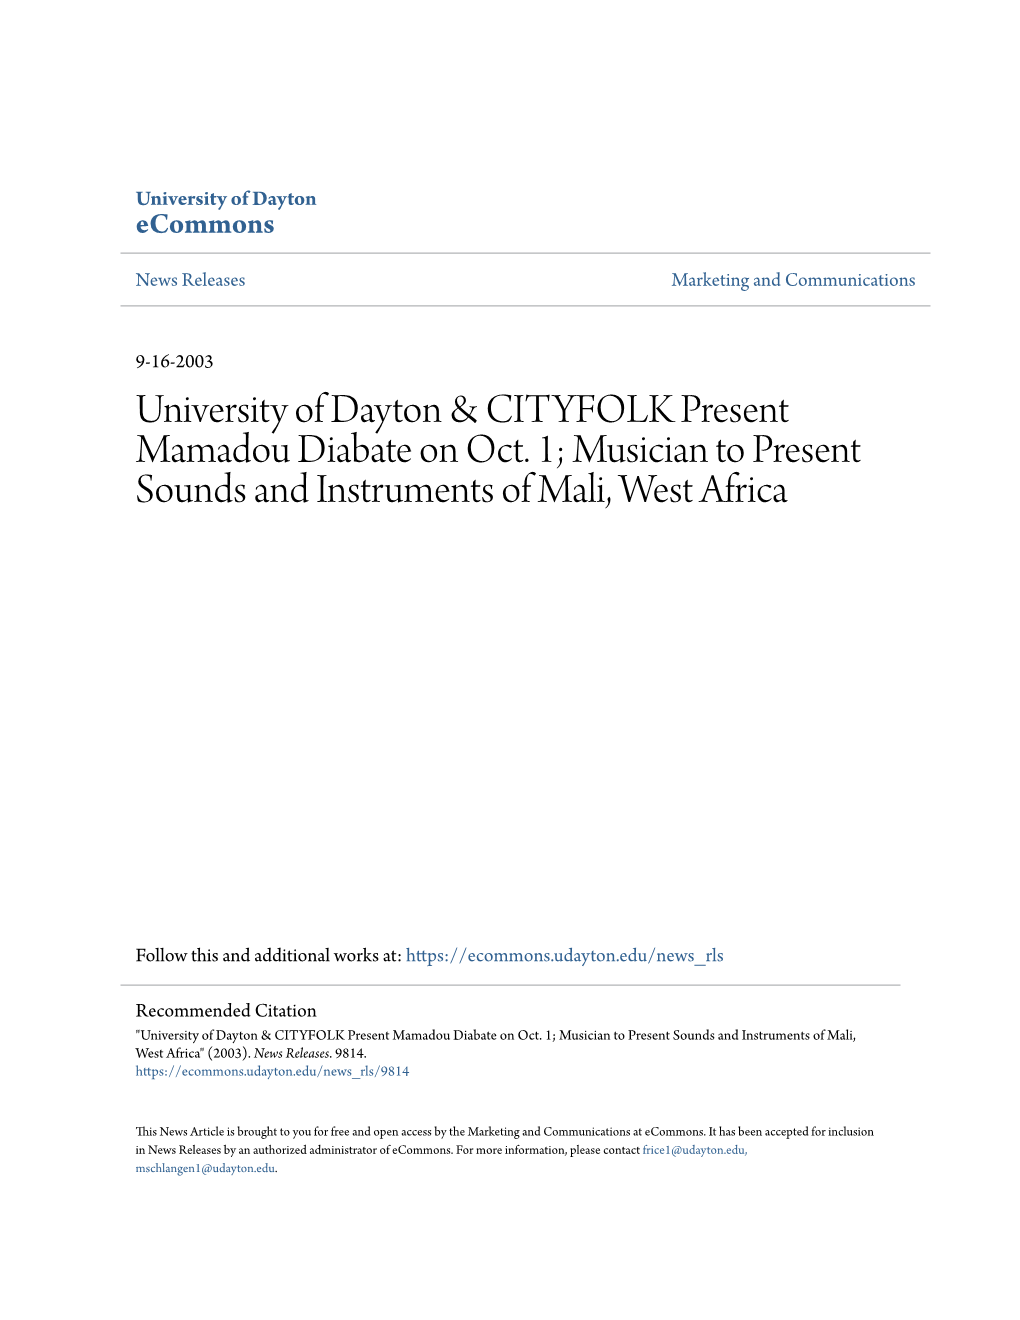 University of Dayton & CITYFOLK Present Mamadou Diabate on Oct. 1